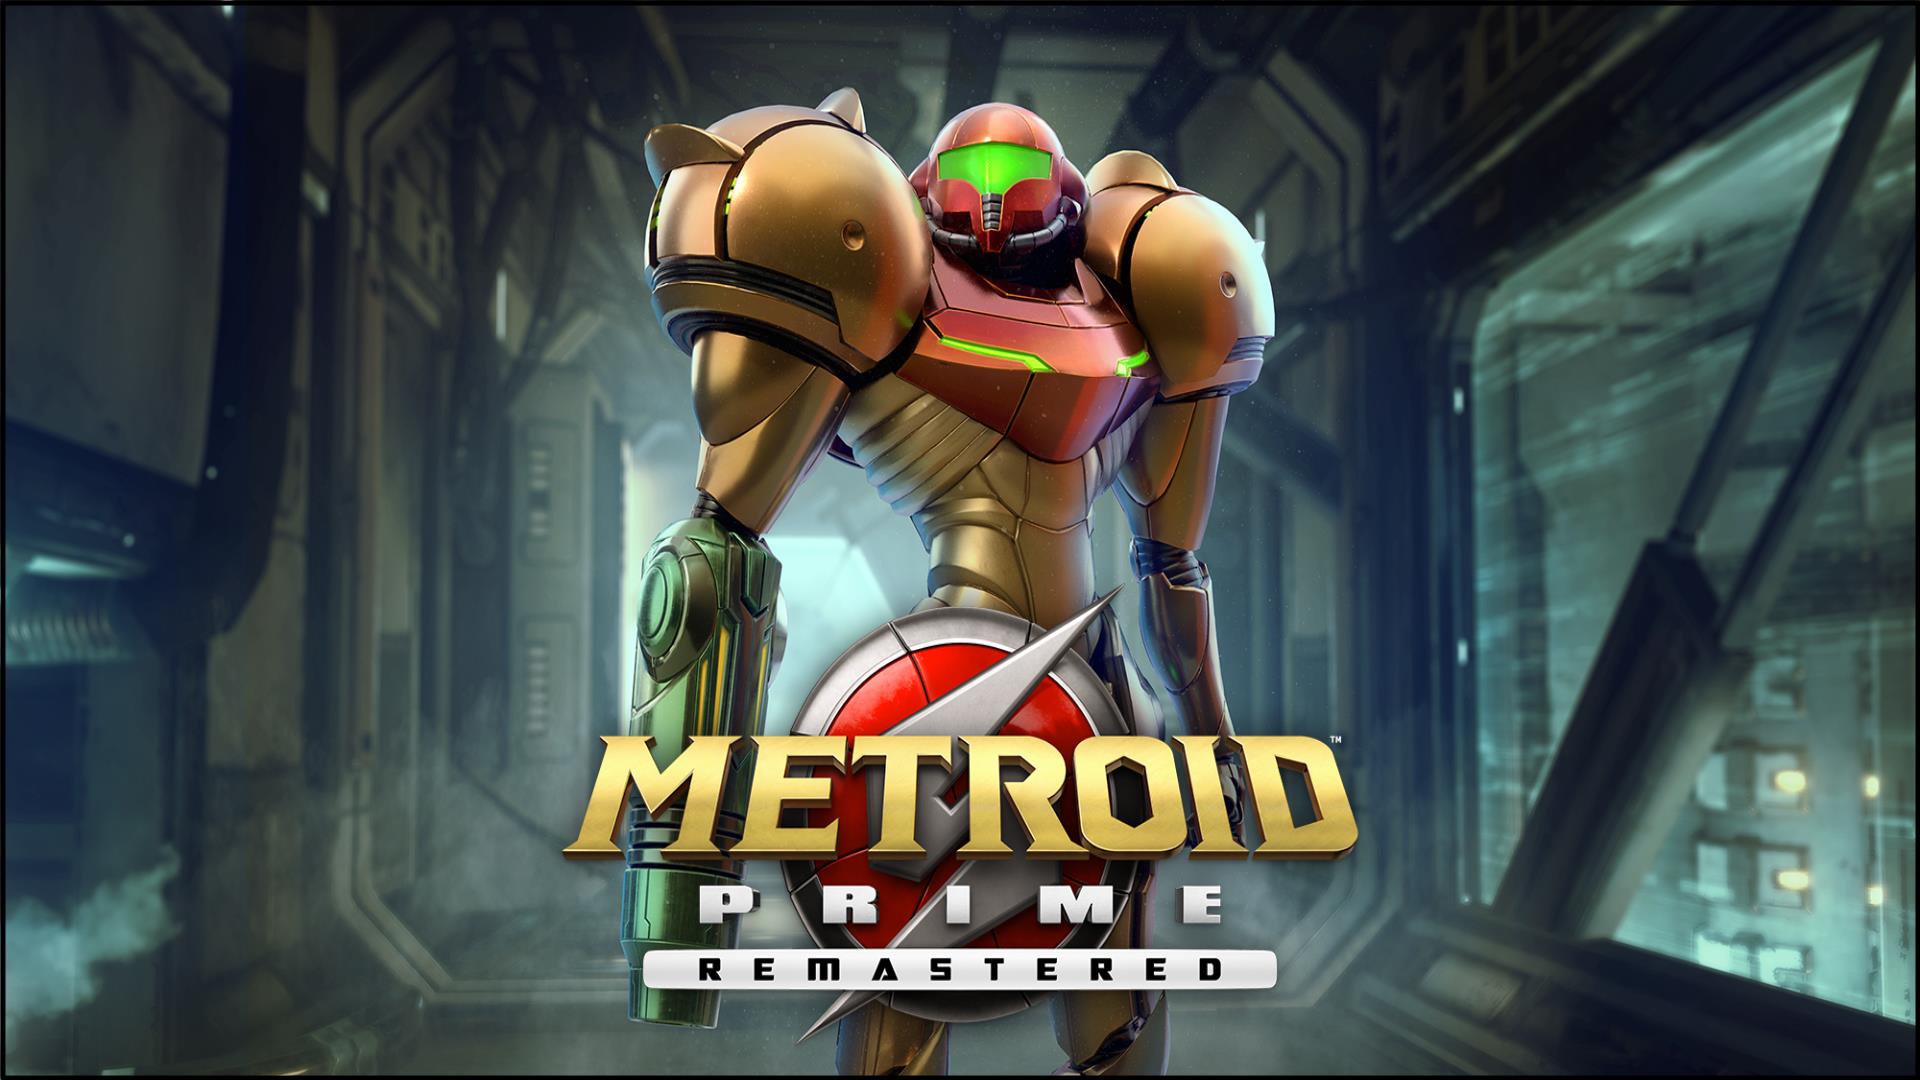 7 Metroid Prime Remastered